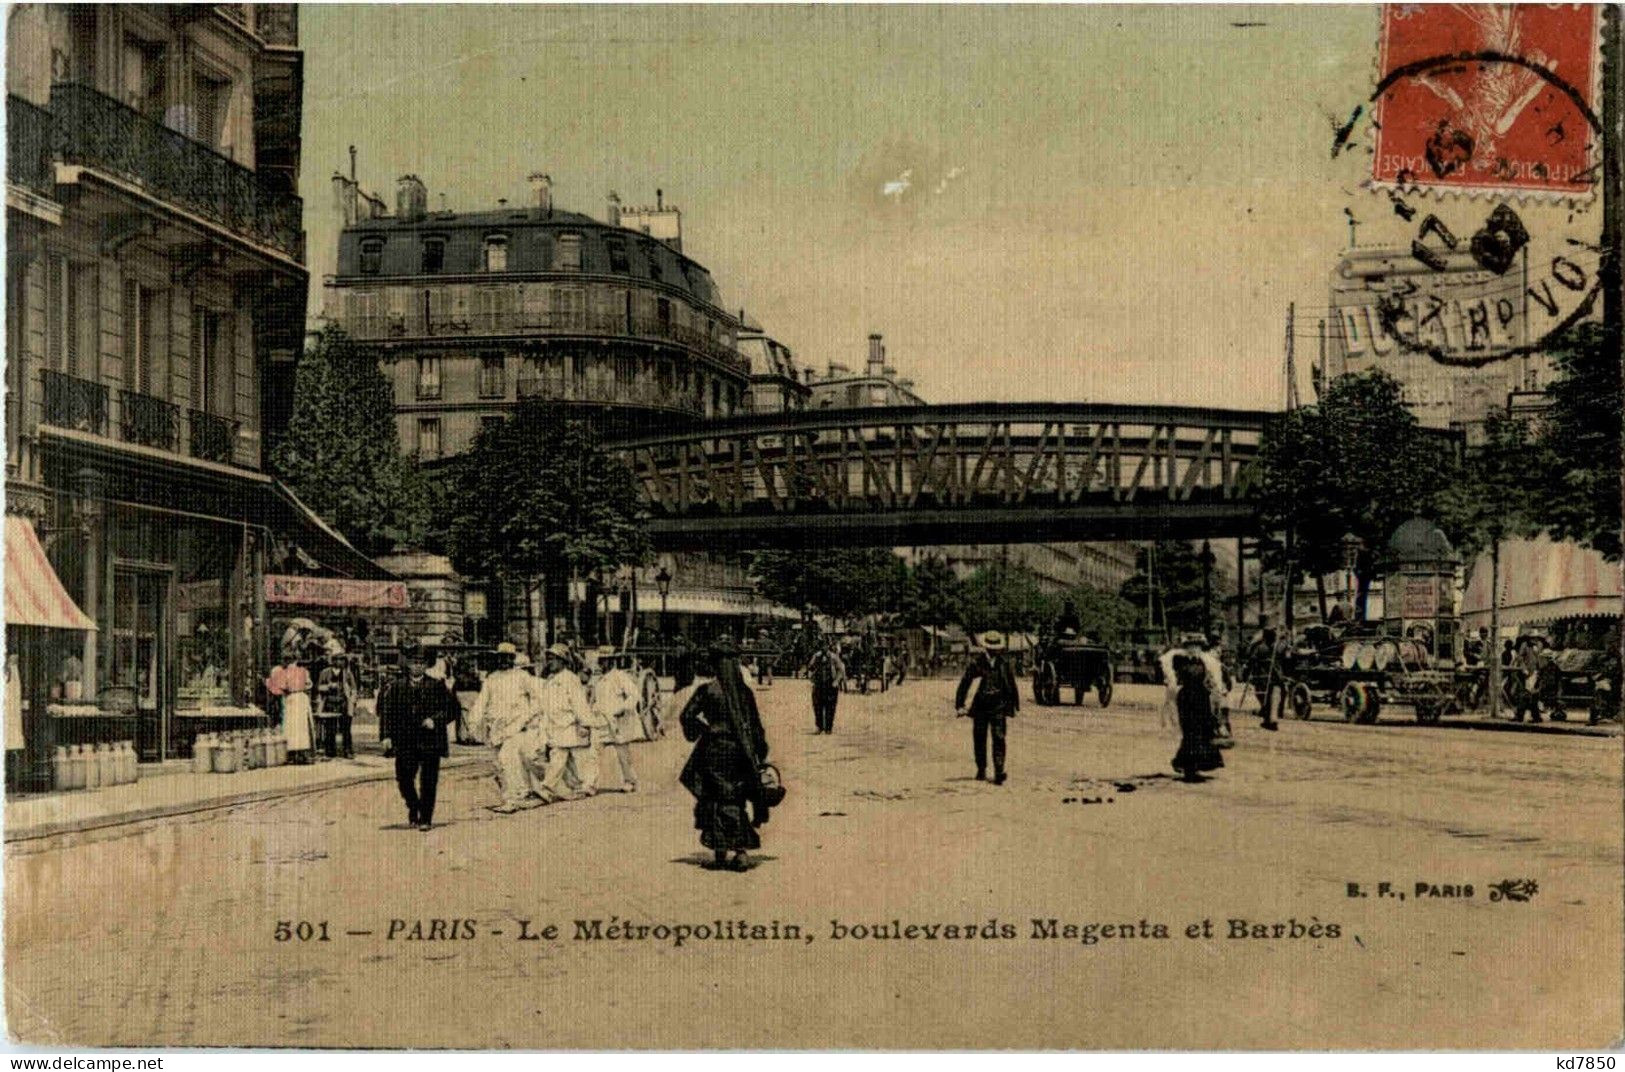 Paris - Metropolitain - Metro, Estaciones